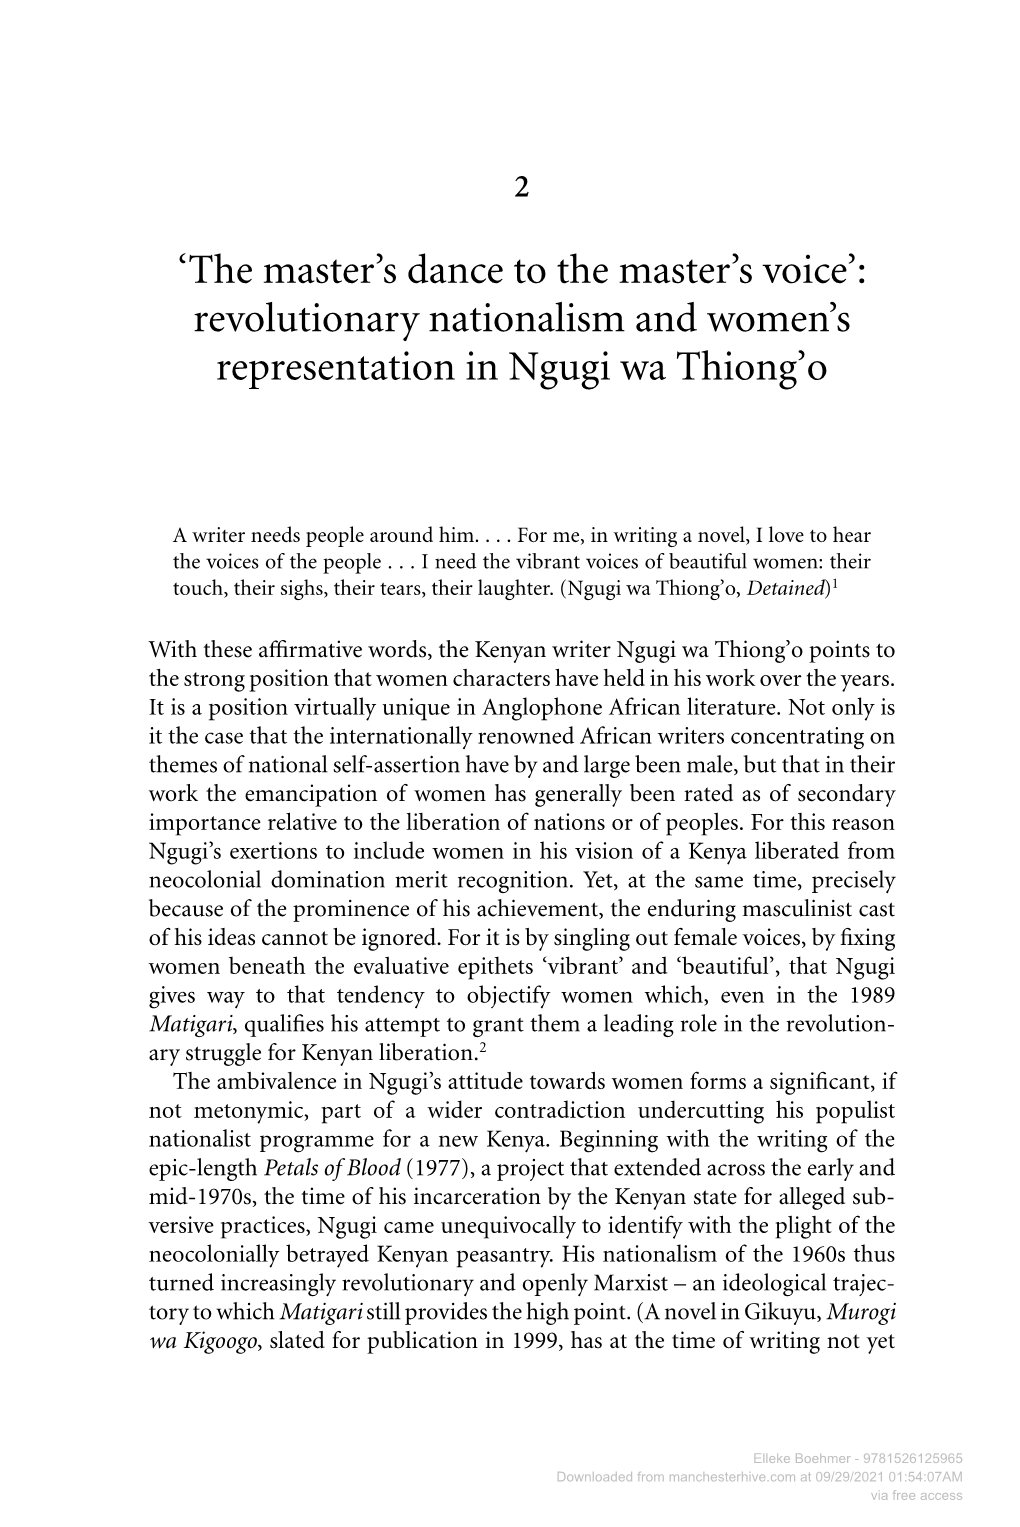 Revolutionary Nationalism and Women's